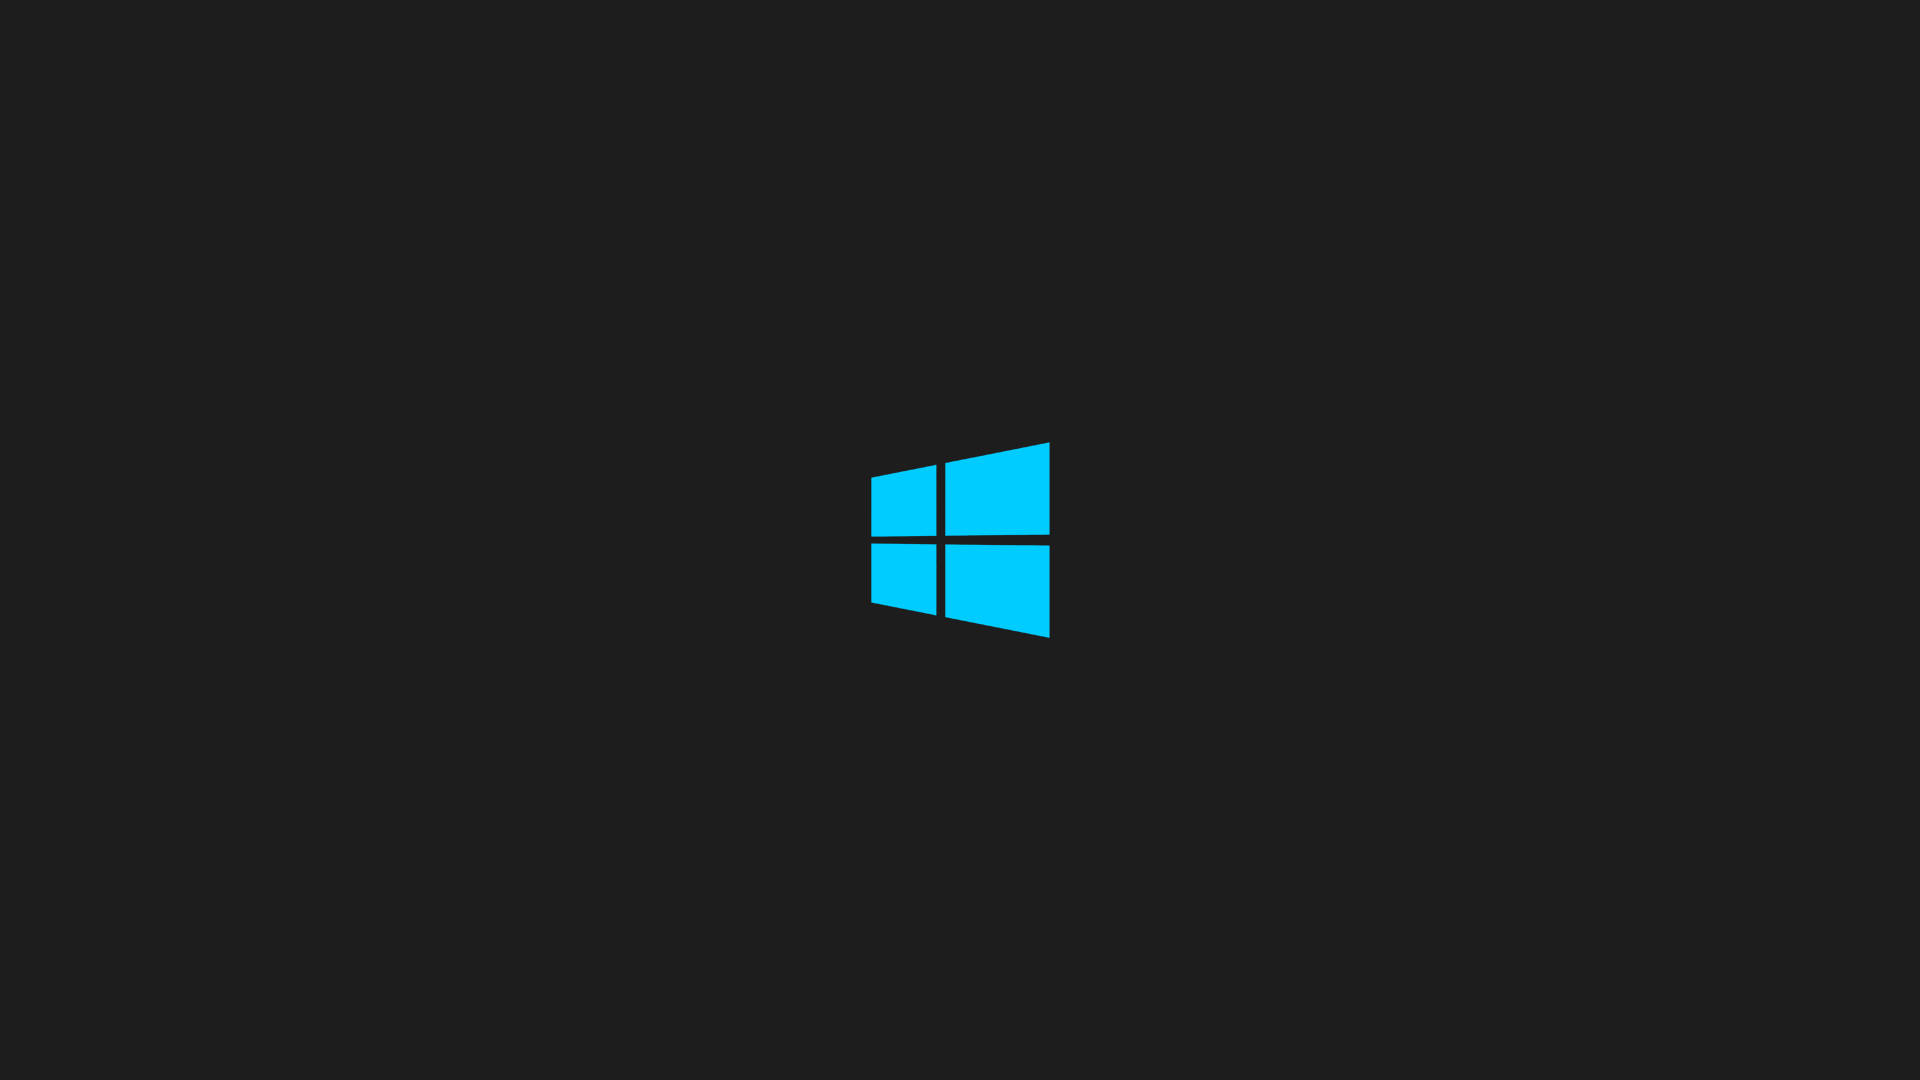 Windows Logo On A Black Background Background